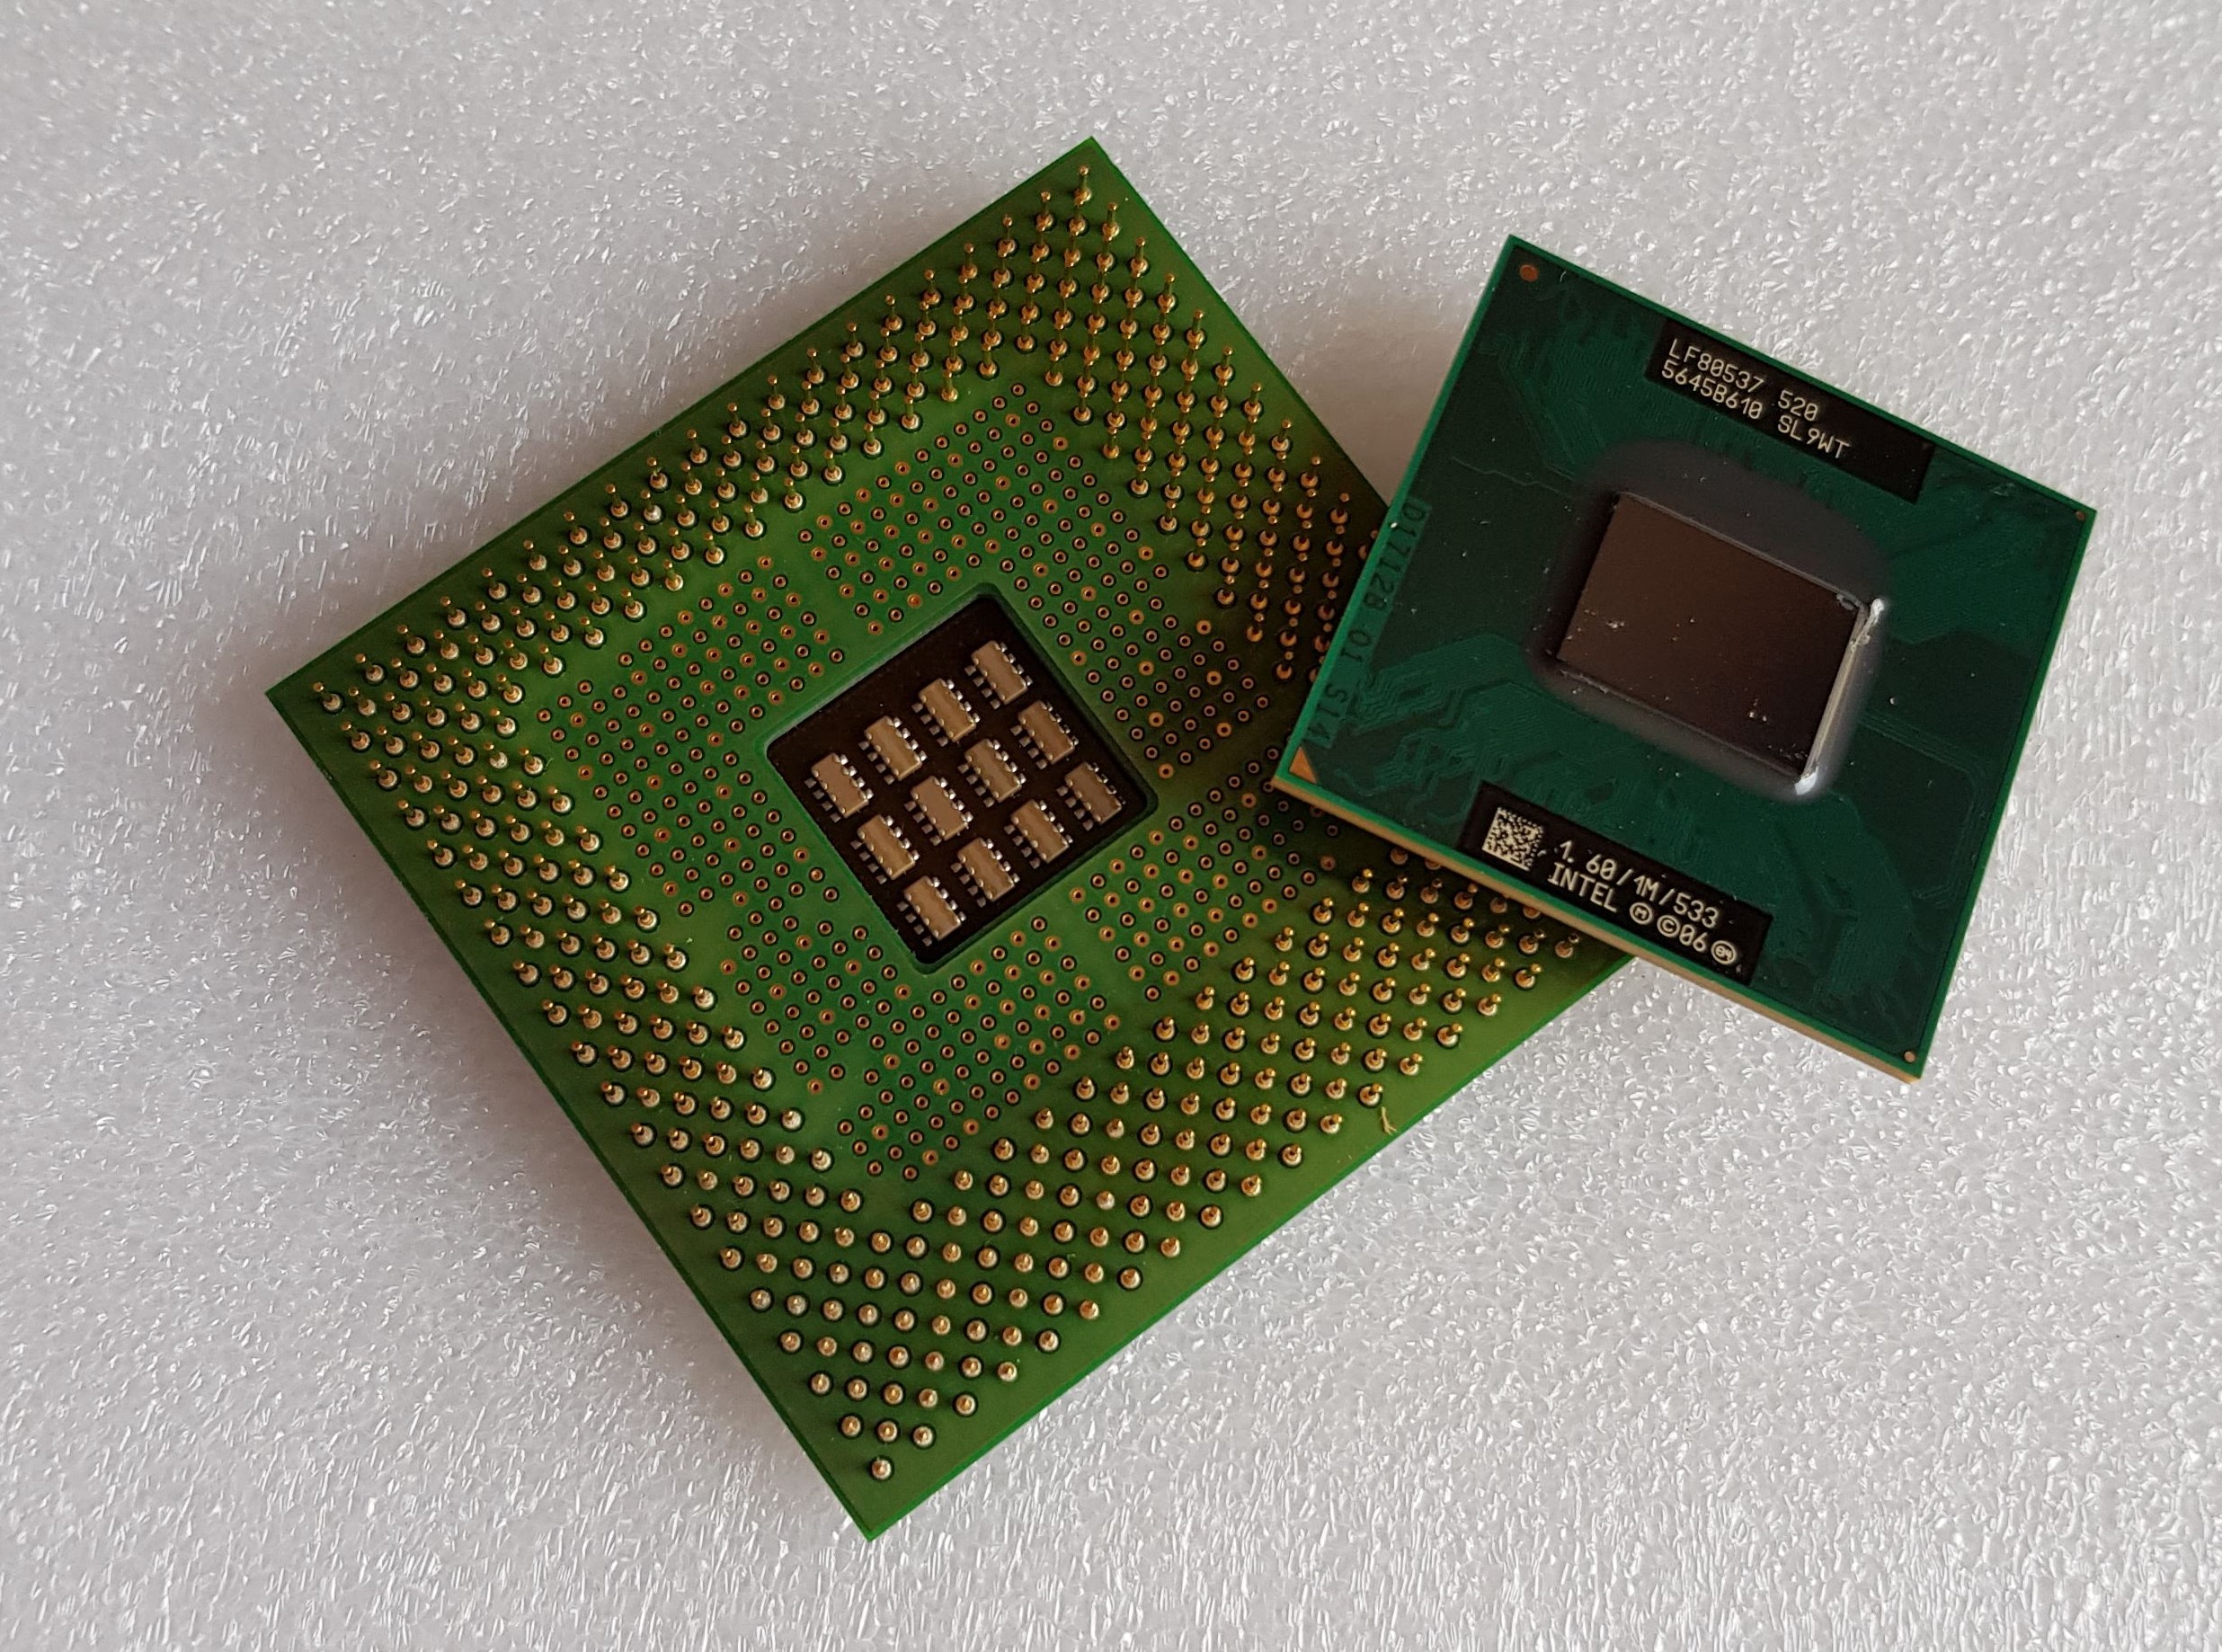 an image of 2 CPU types